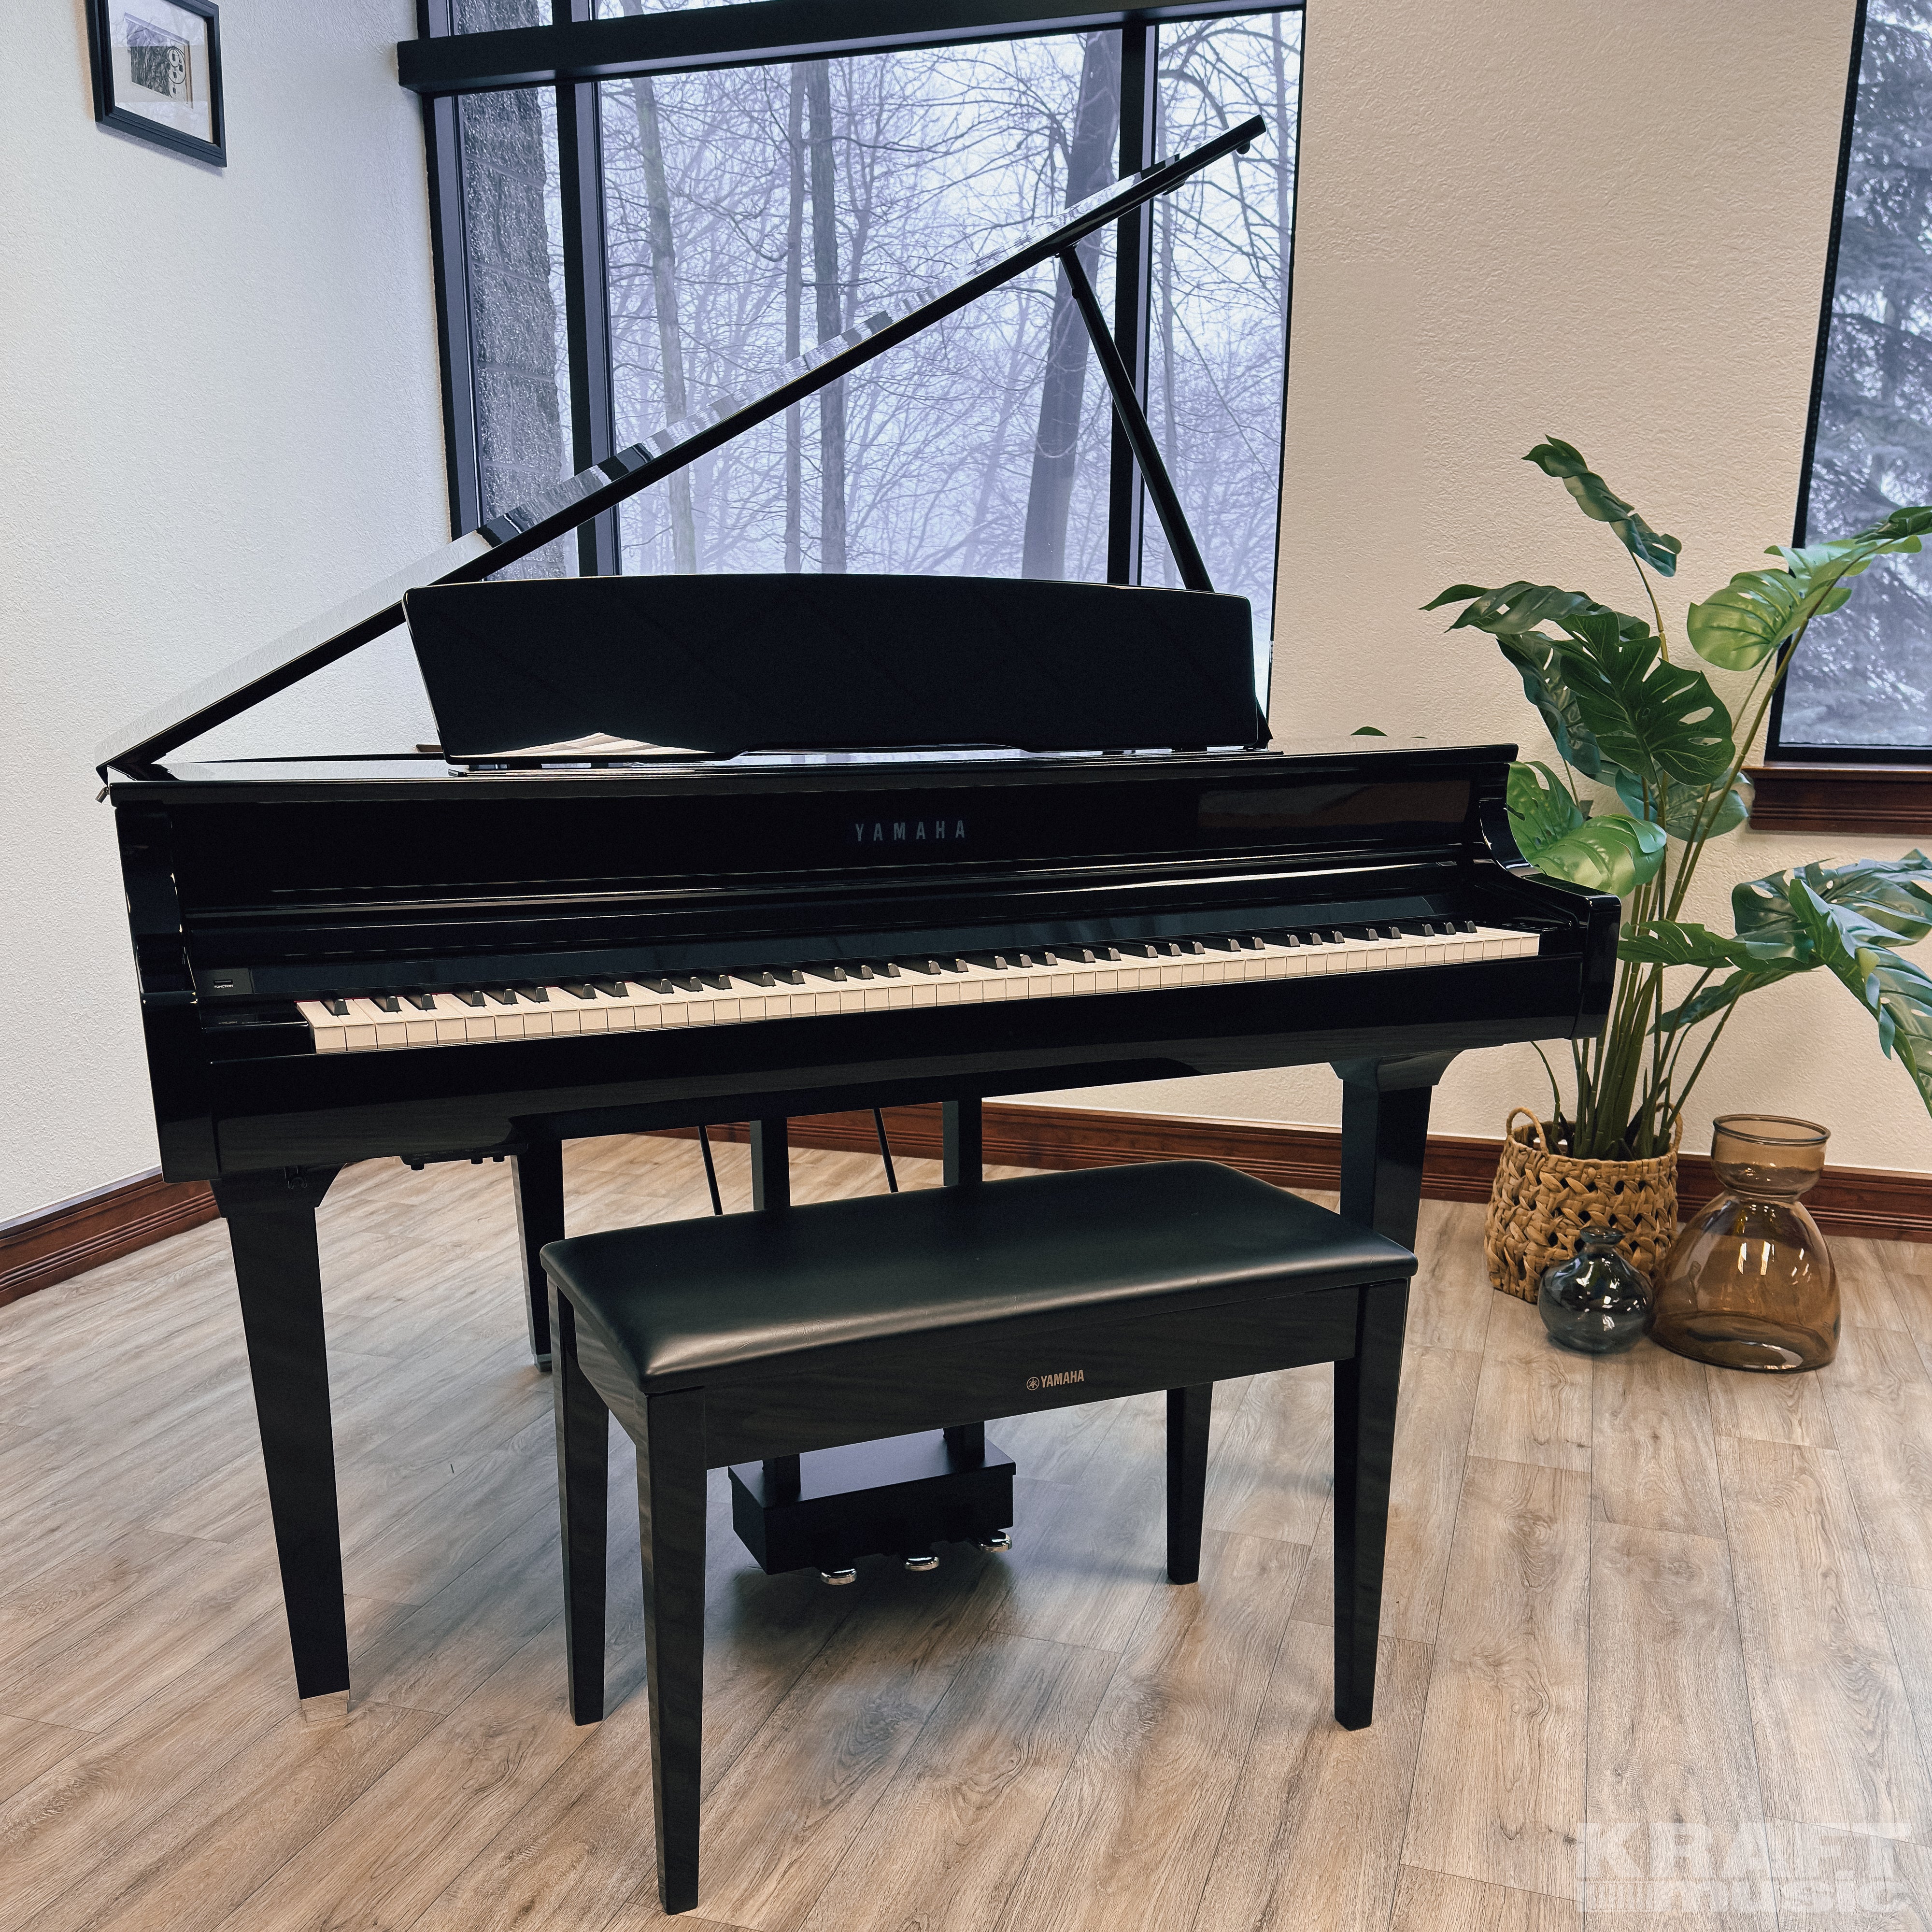 Yamaha Clavinova CSP-295GP Digital Grand Piano - Polished Ebony - in a stylish music room front view